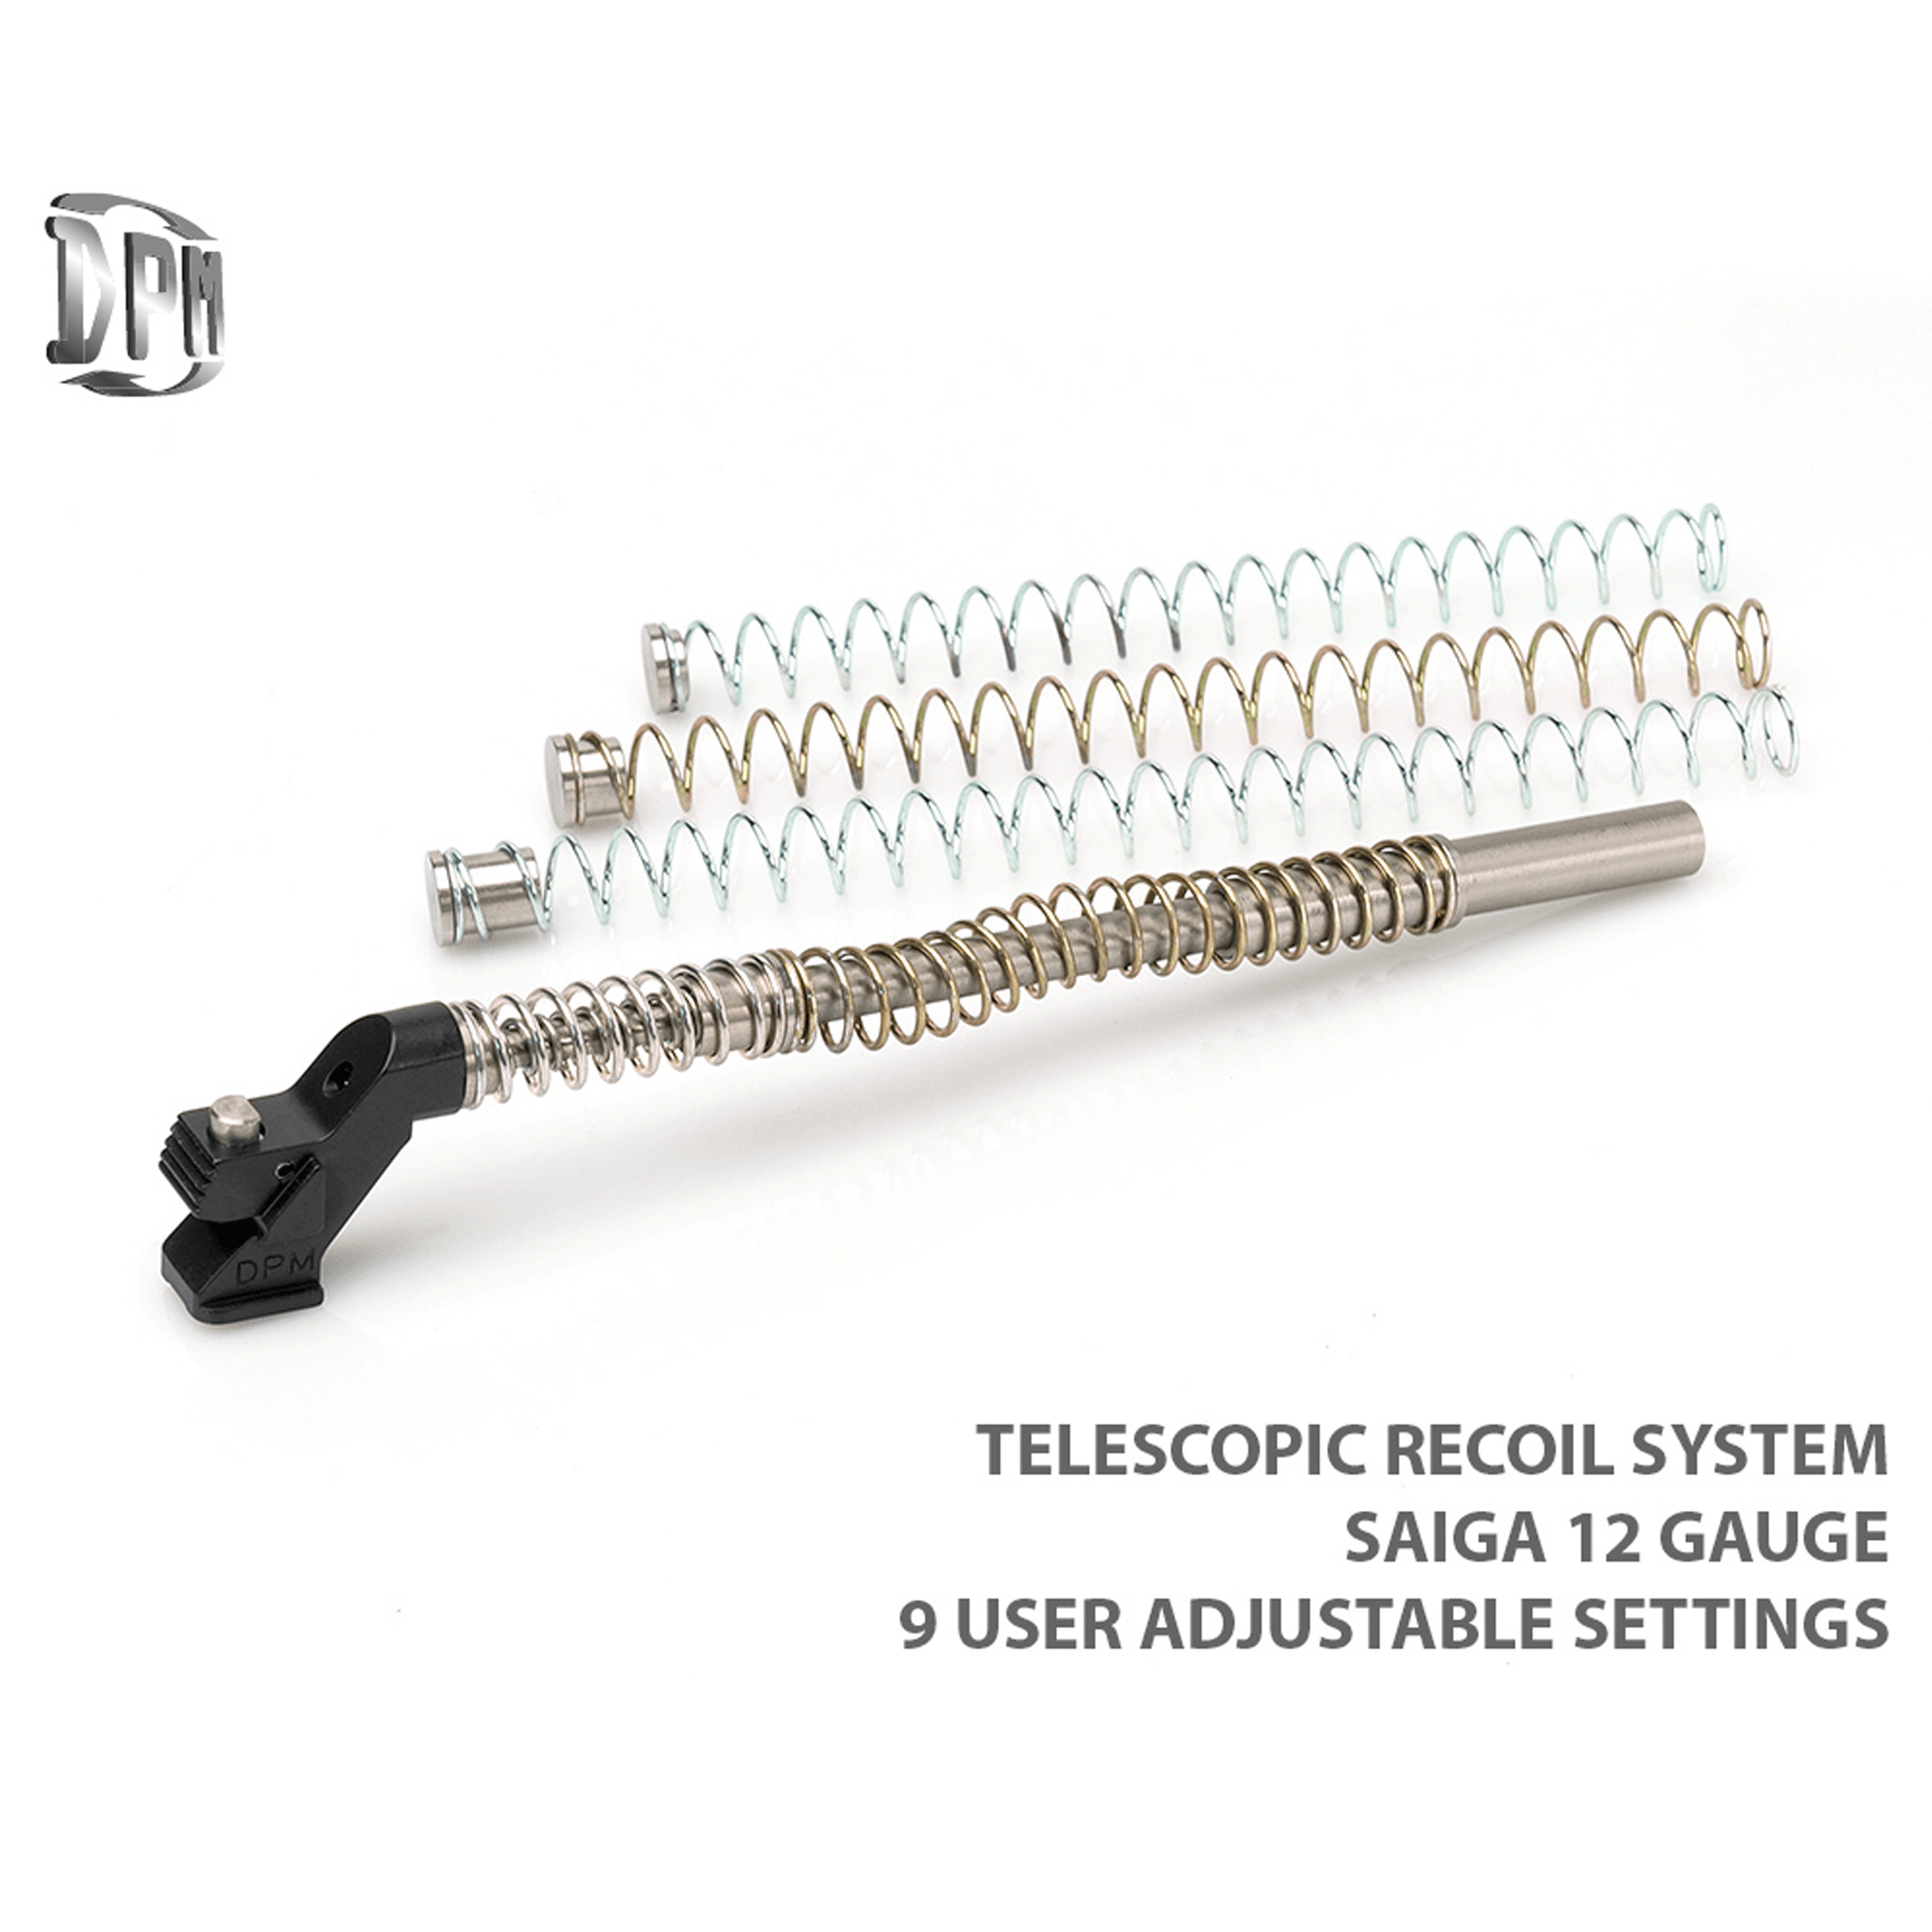 SAIGA Flinte Kaliber 12 - Telescopic Recoil System